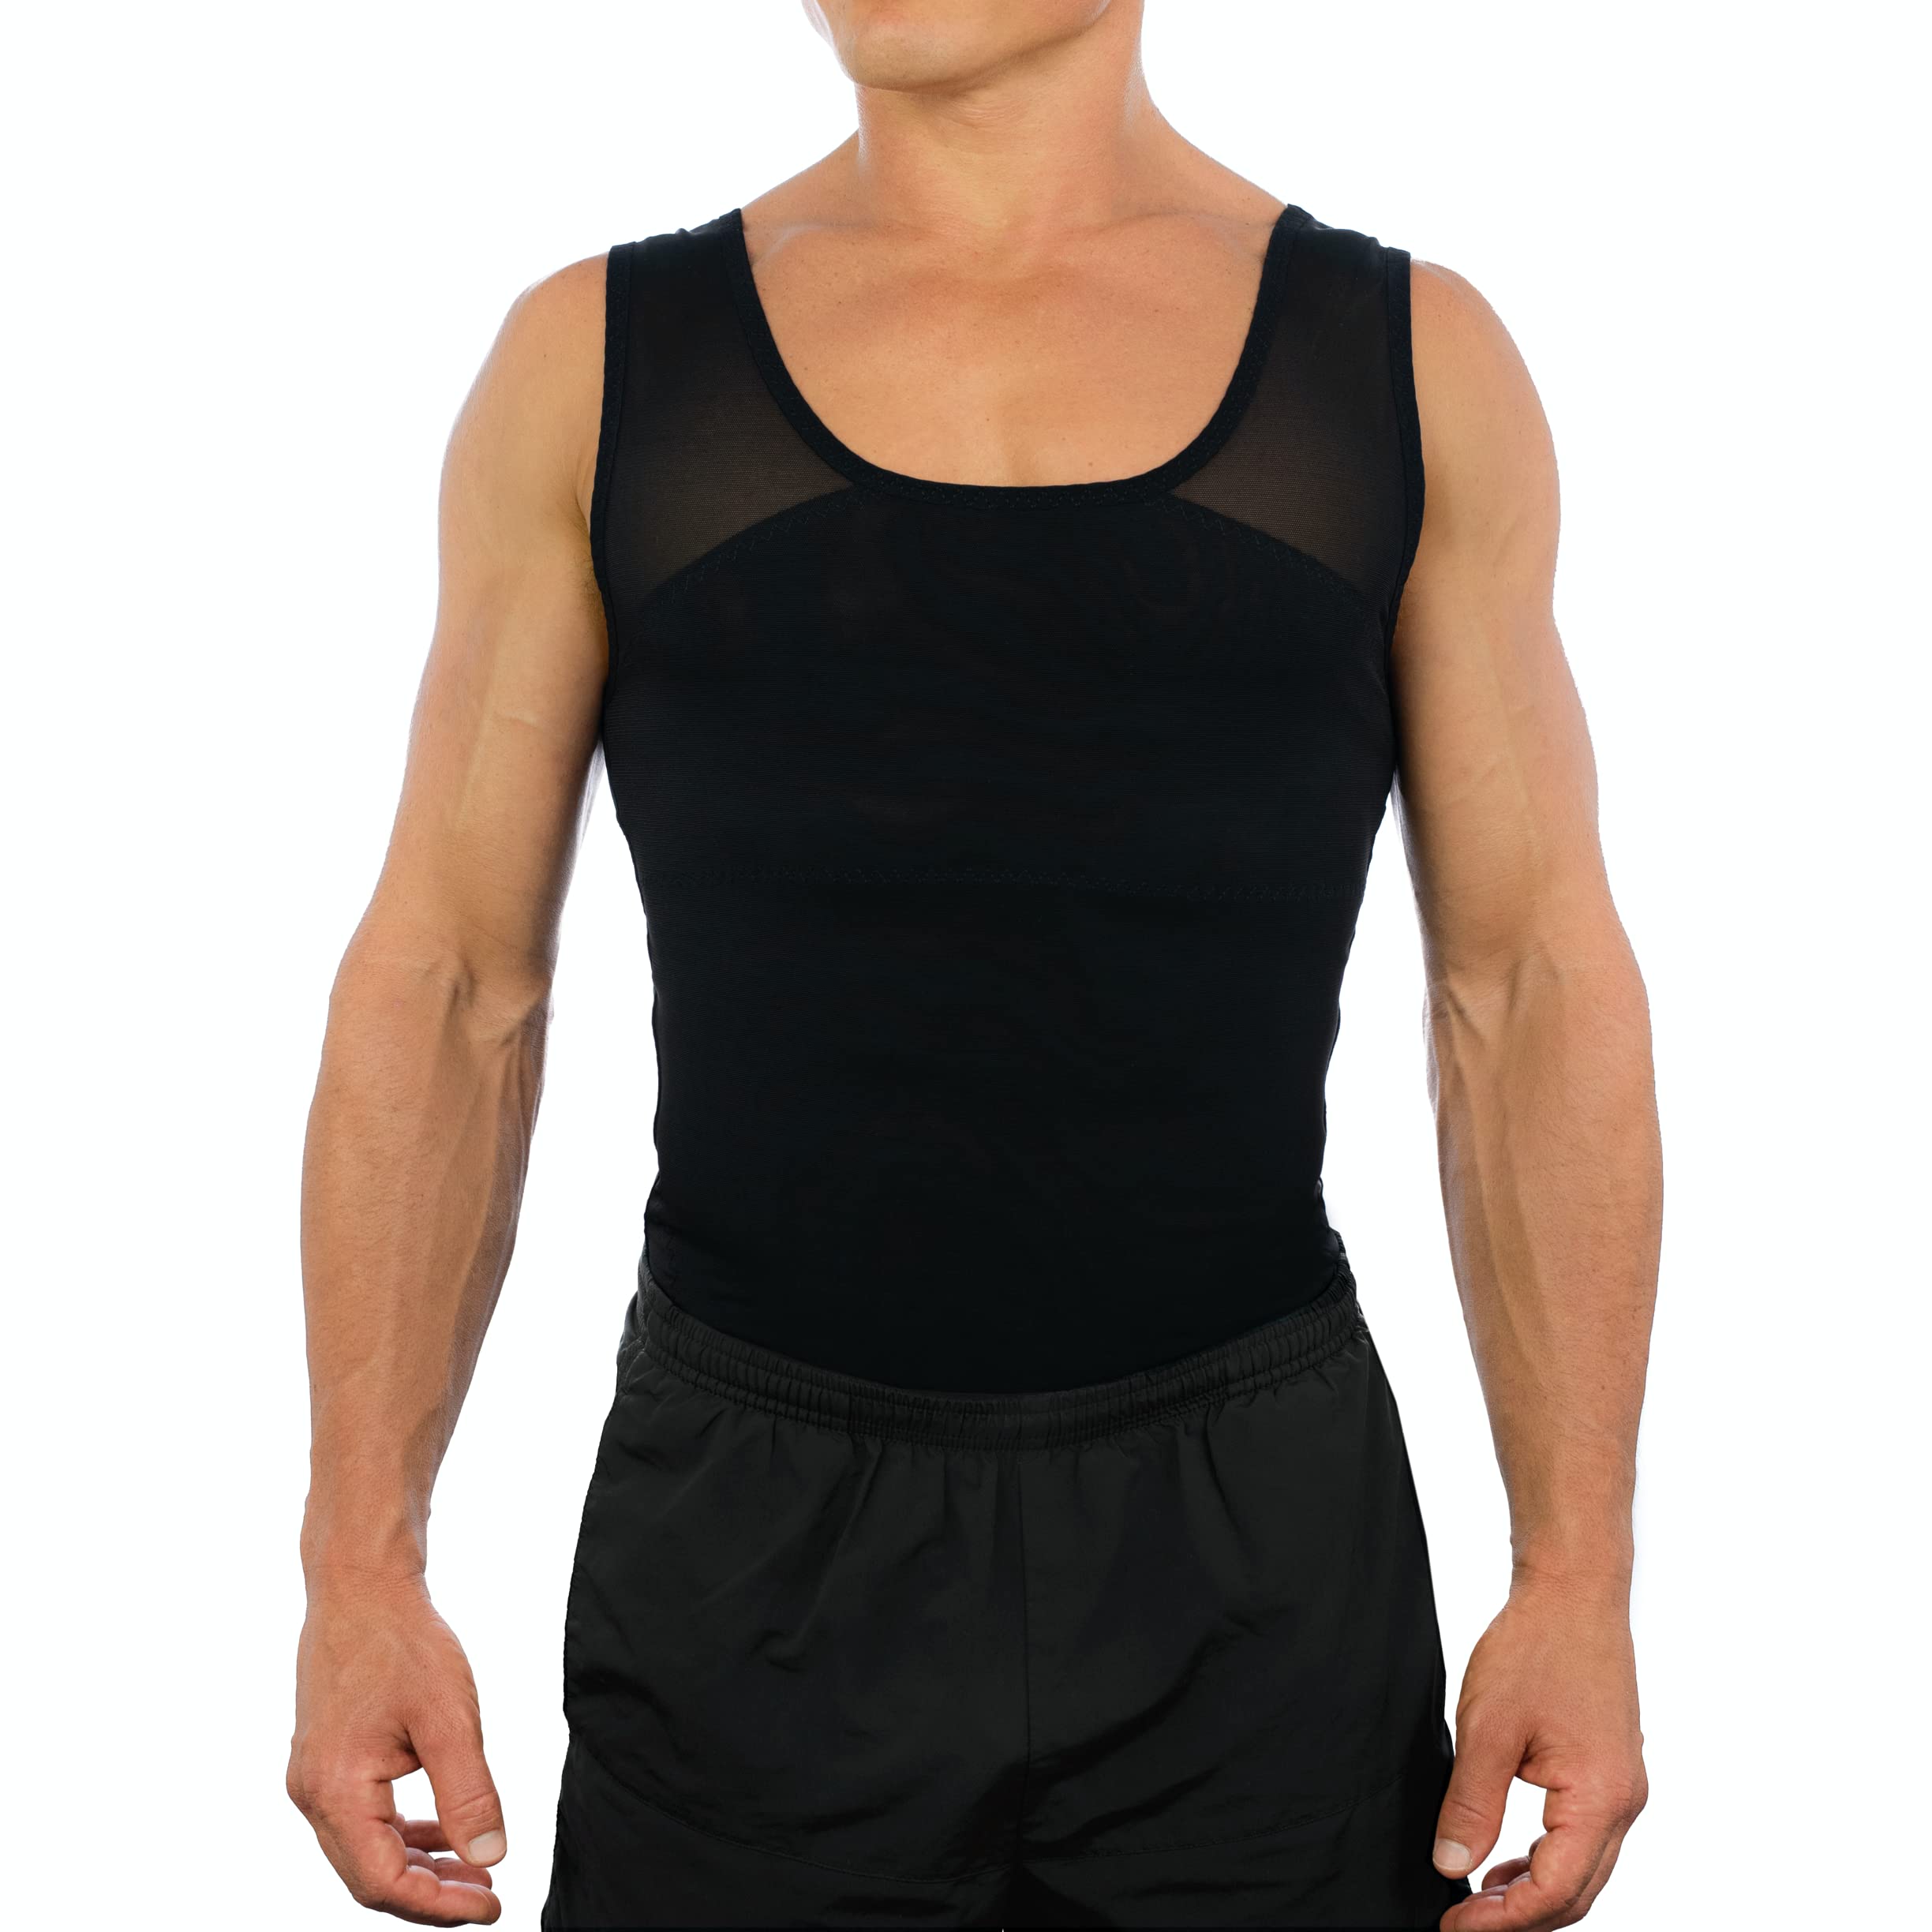 Esteem Apparel Original Mens chest compression Shirt to Hide gynecomastia Moobs Shapewear (Black, Medium)